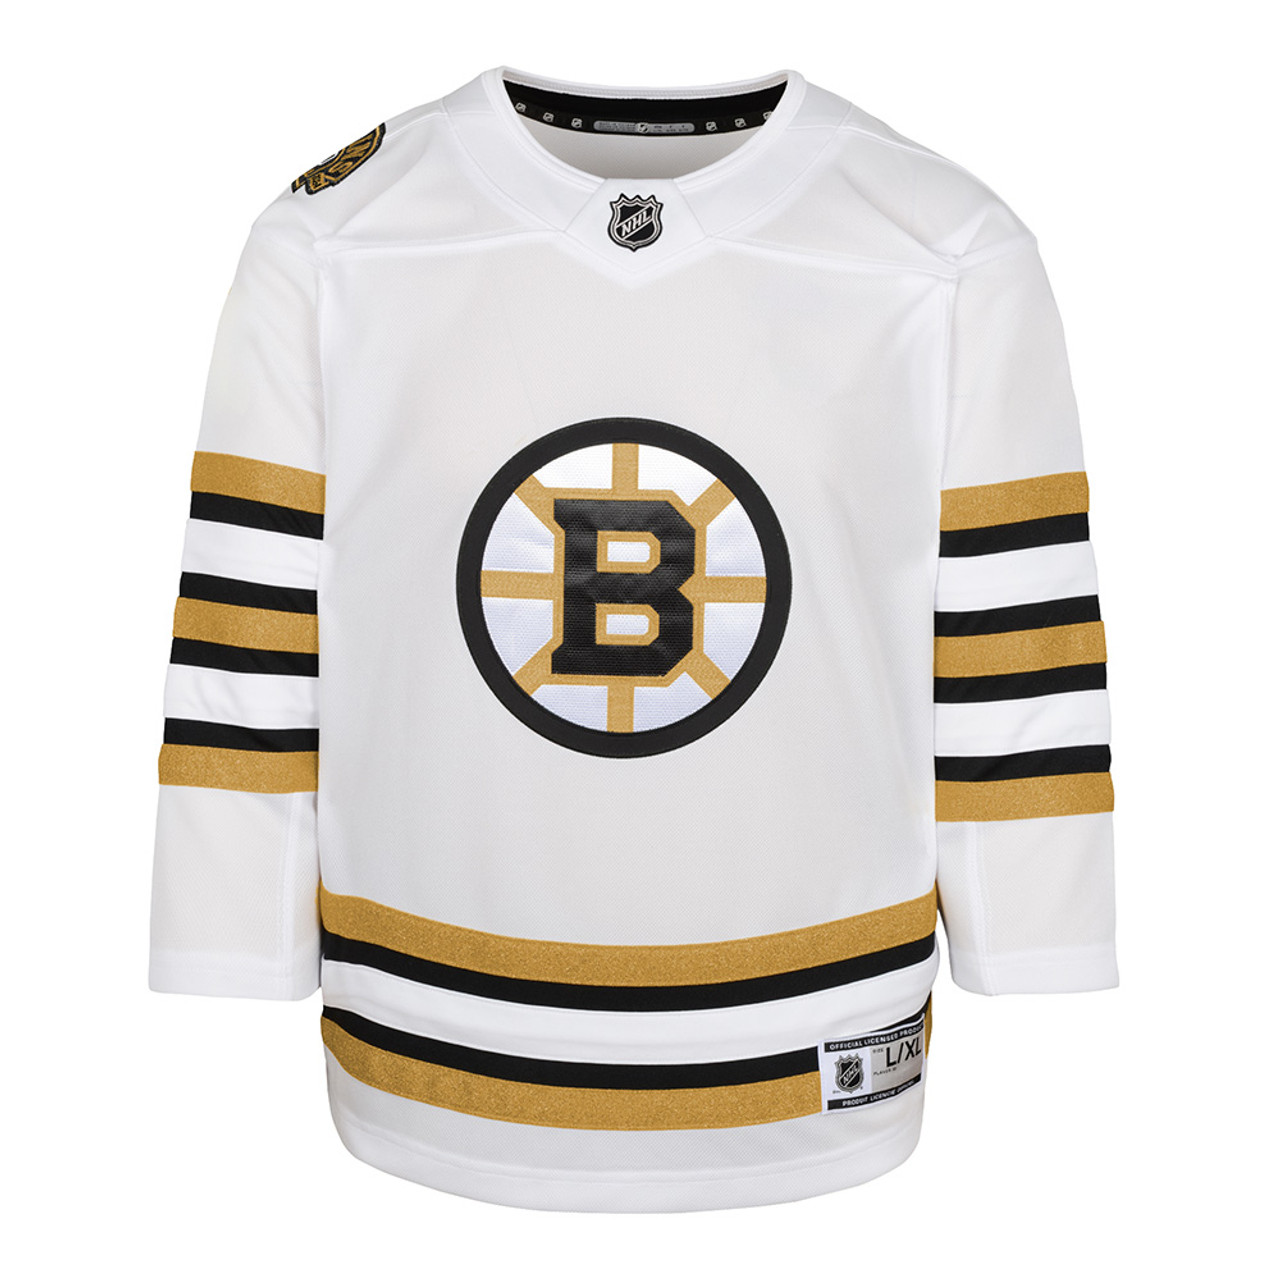 Boston Bruins Gear, Jerseys, Store, Pro Shop, Hockey Apparel